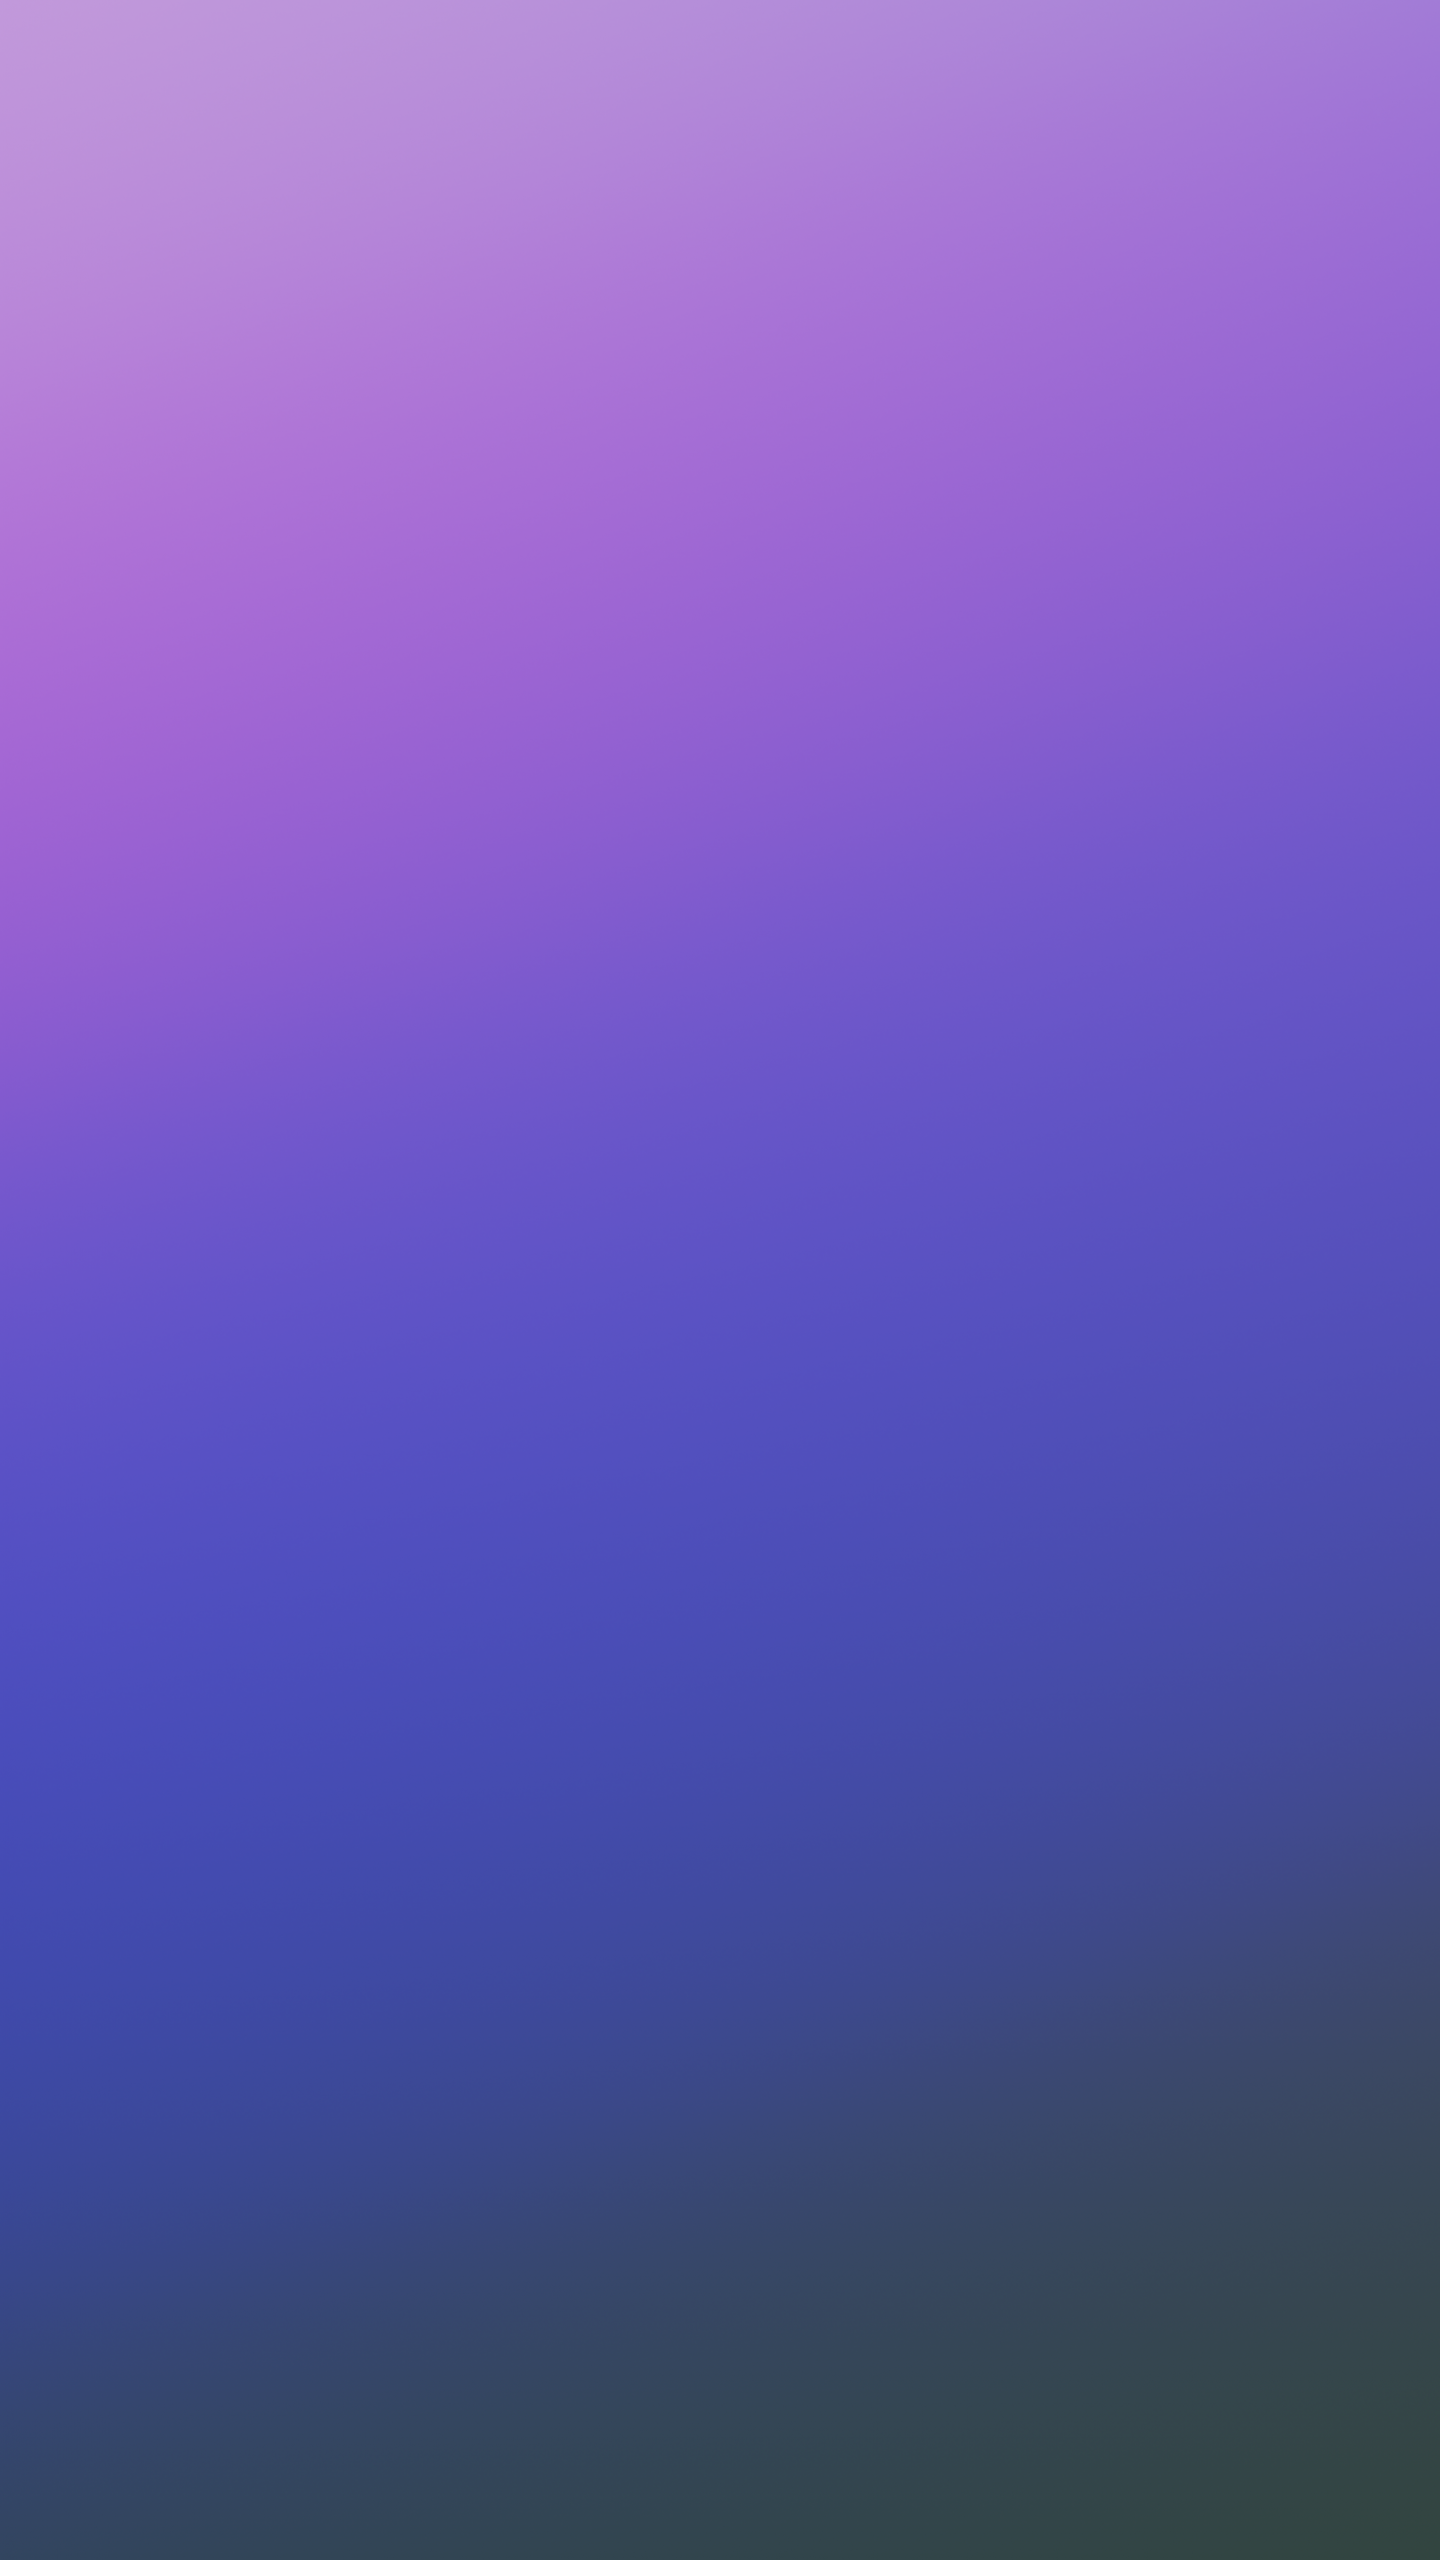 Wallpaper Blur, Gradient, purple, Violet, Background, HD, 4K, 5K, Minimal,. Wallpaper for iPhone, Android, Mobile and Desktop